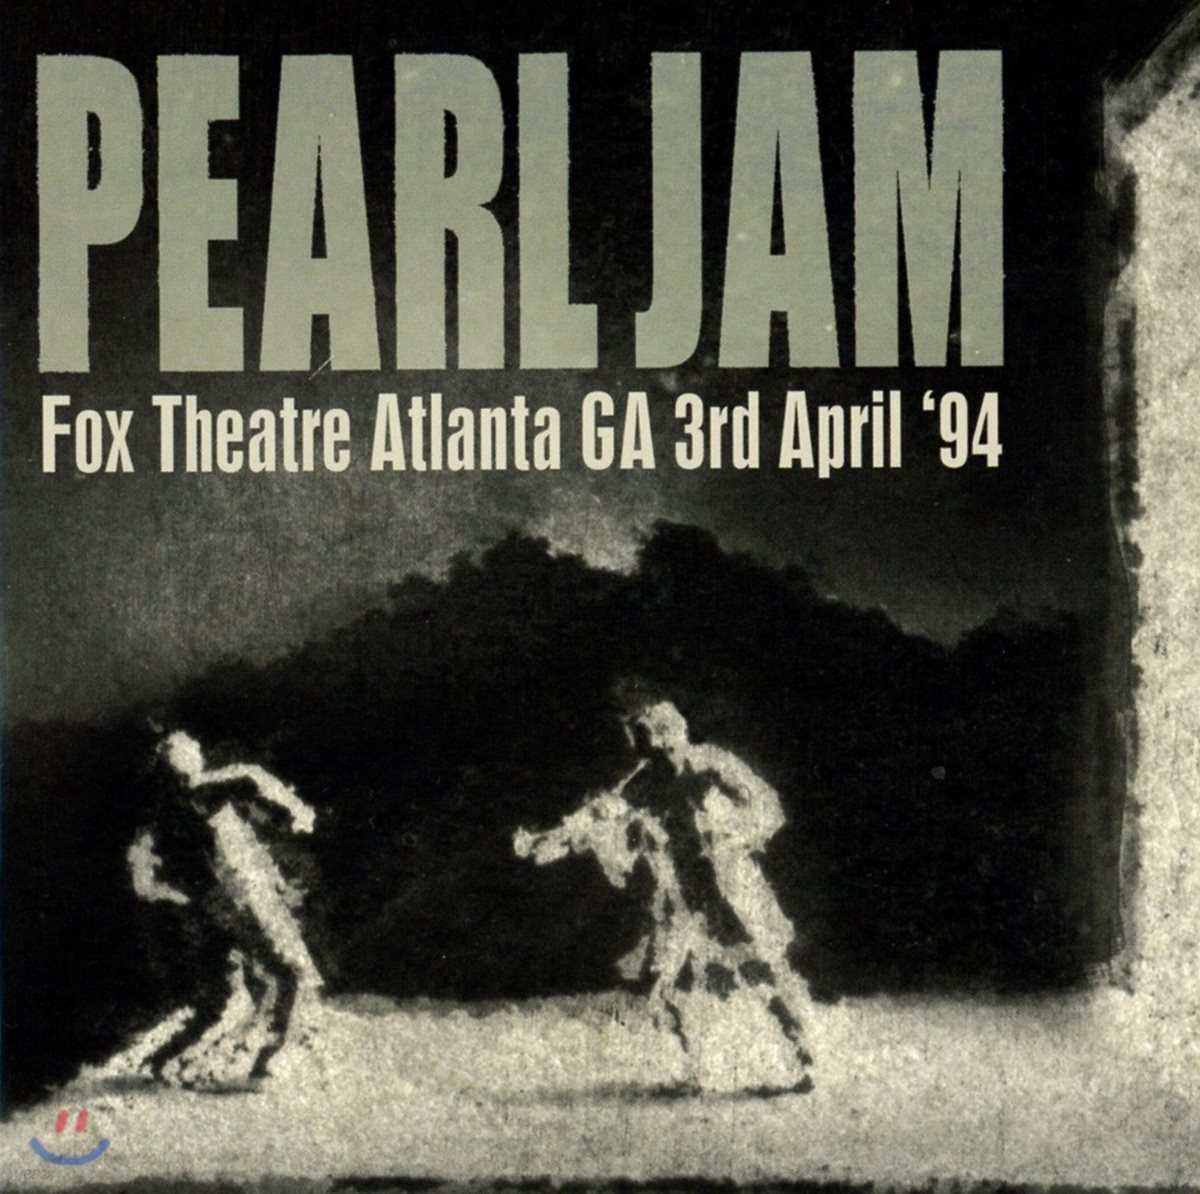 Pearl Jam - Fox Theatre Atlanta GA 3rd April '94 펄 잼 1994년 라이브 실황 